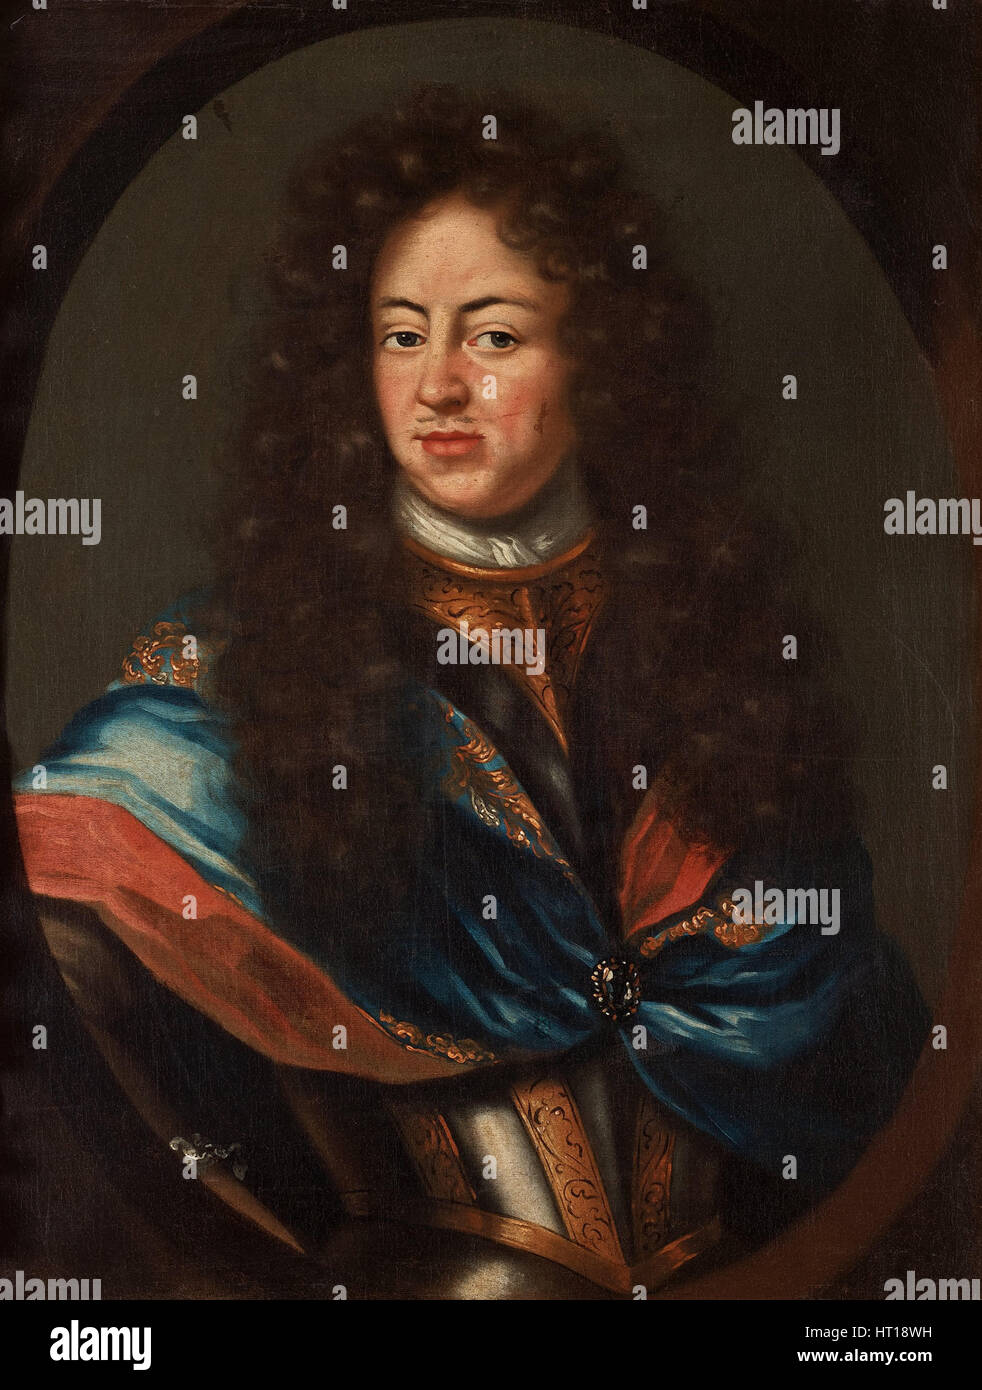 Retrato de Carlos XI de Suecia (1655-1697). Artista: Mytens (Mijtens), Martin van (1648-1736) Foto de stock